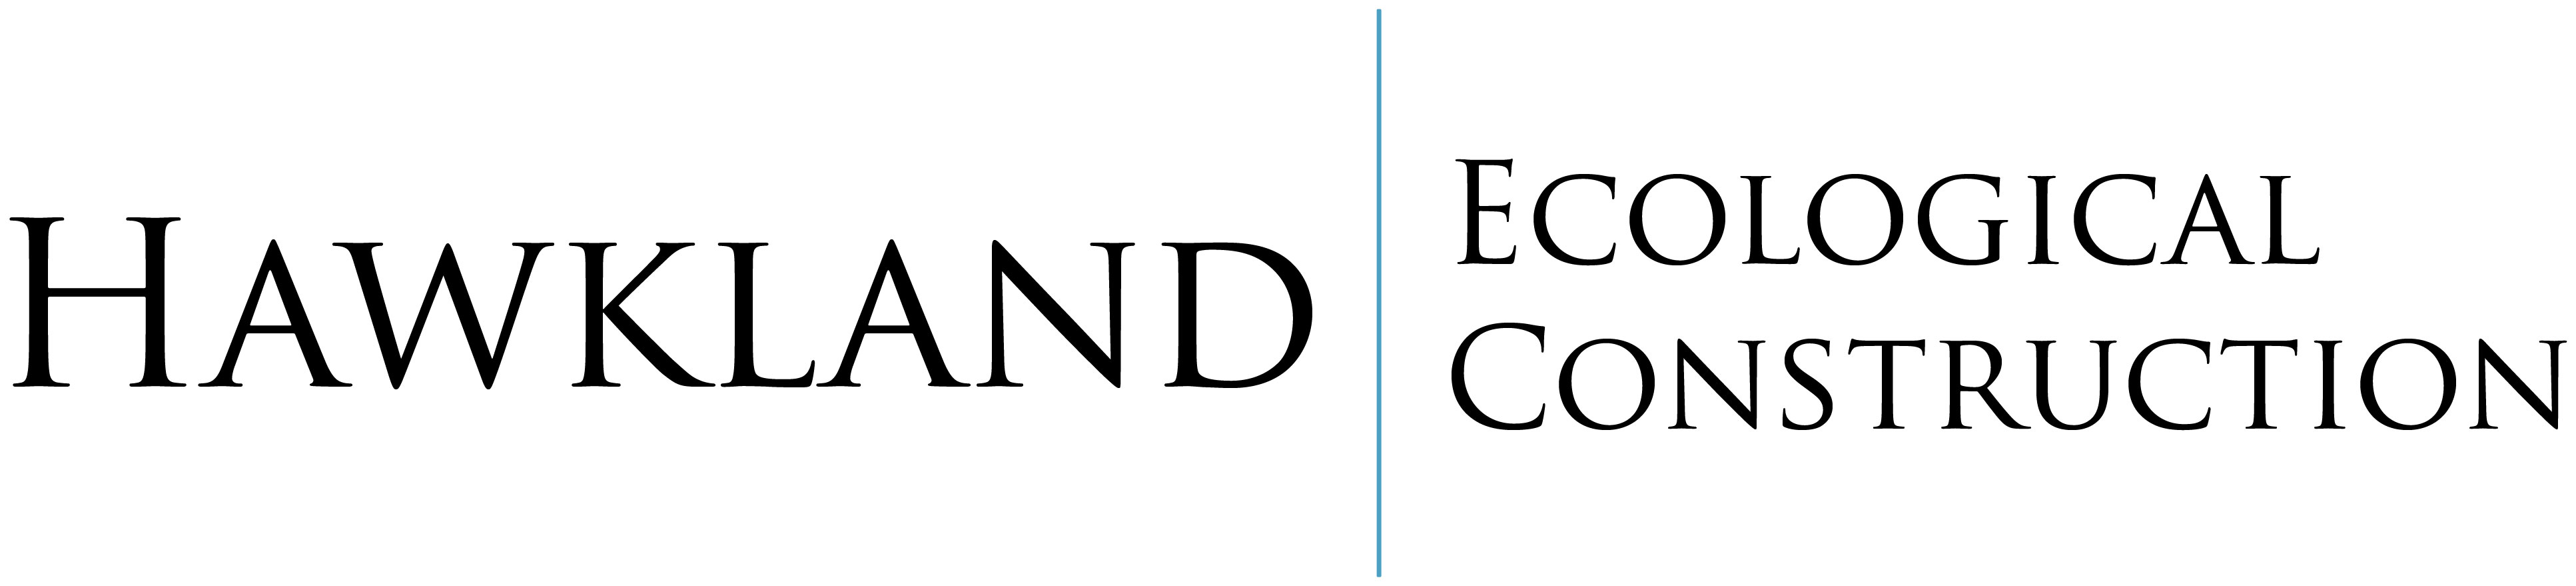 logo for Hawkland Ecological Construction